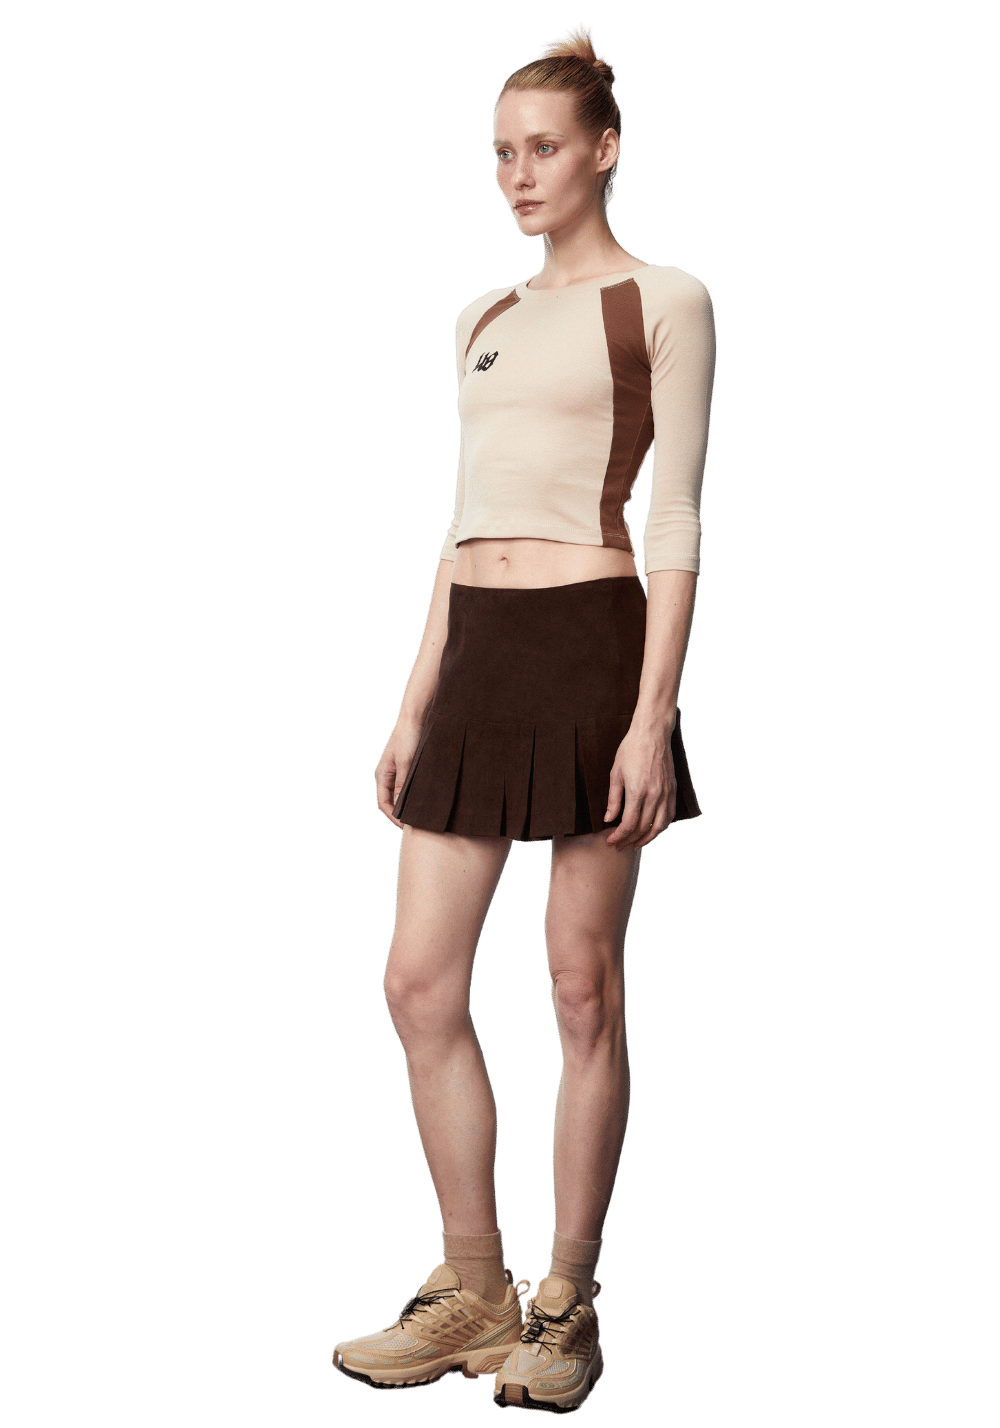 Asymmetric Zip Suede Pleated Skirt - PSYLOS 1, Asymmetric Zip Suede Pleated Skirt, Dress/Skirt, 40 CREW, PSYLOS 1